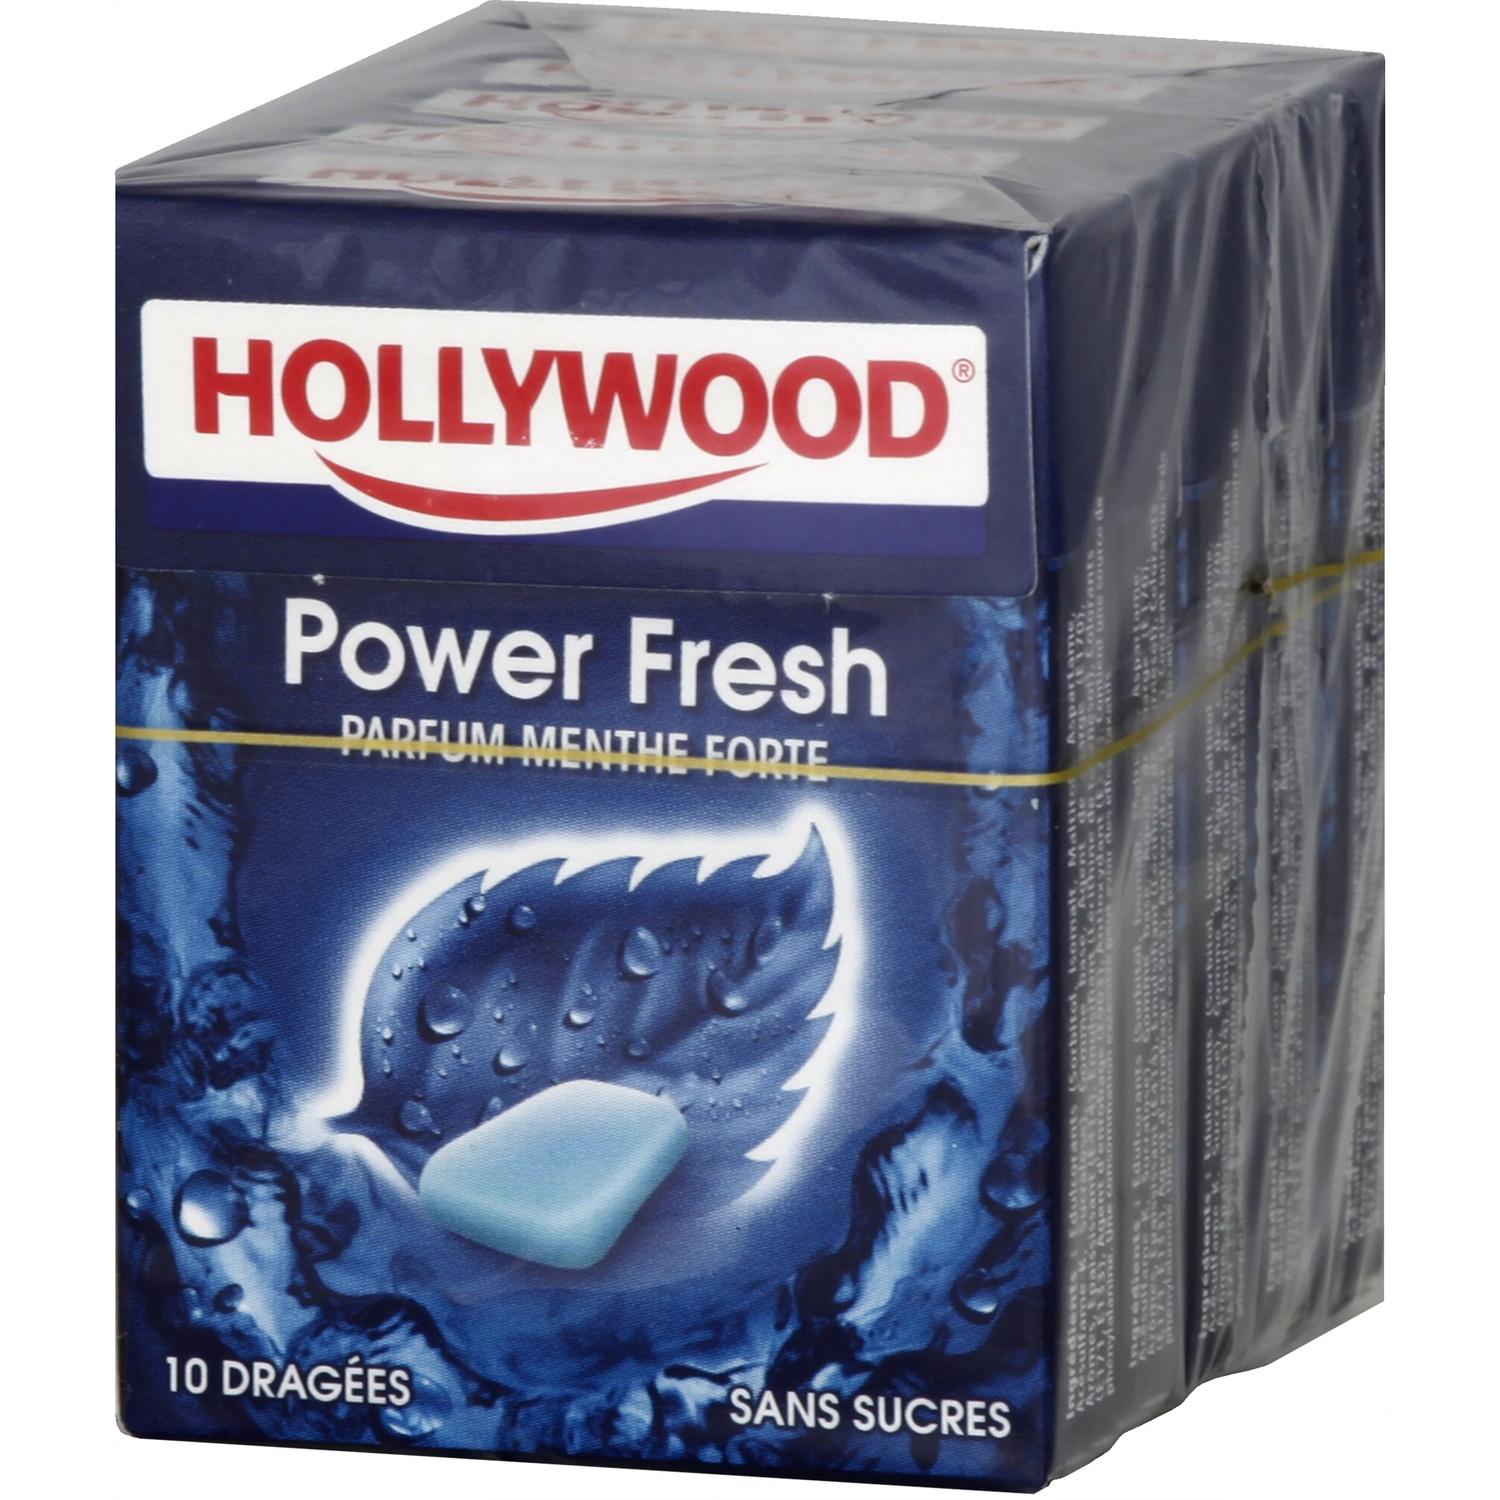 Fresh Mint Chewing-Gum Hollywood